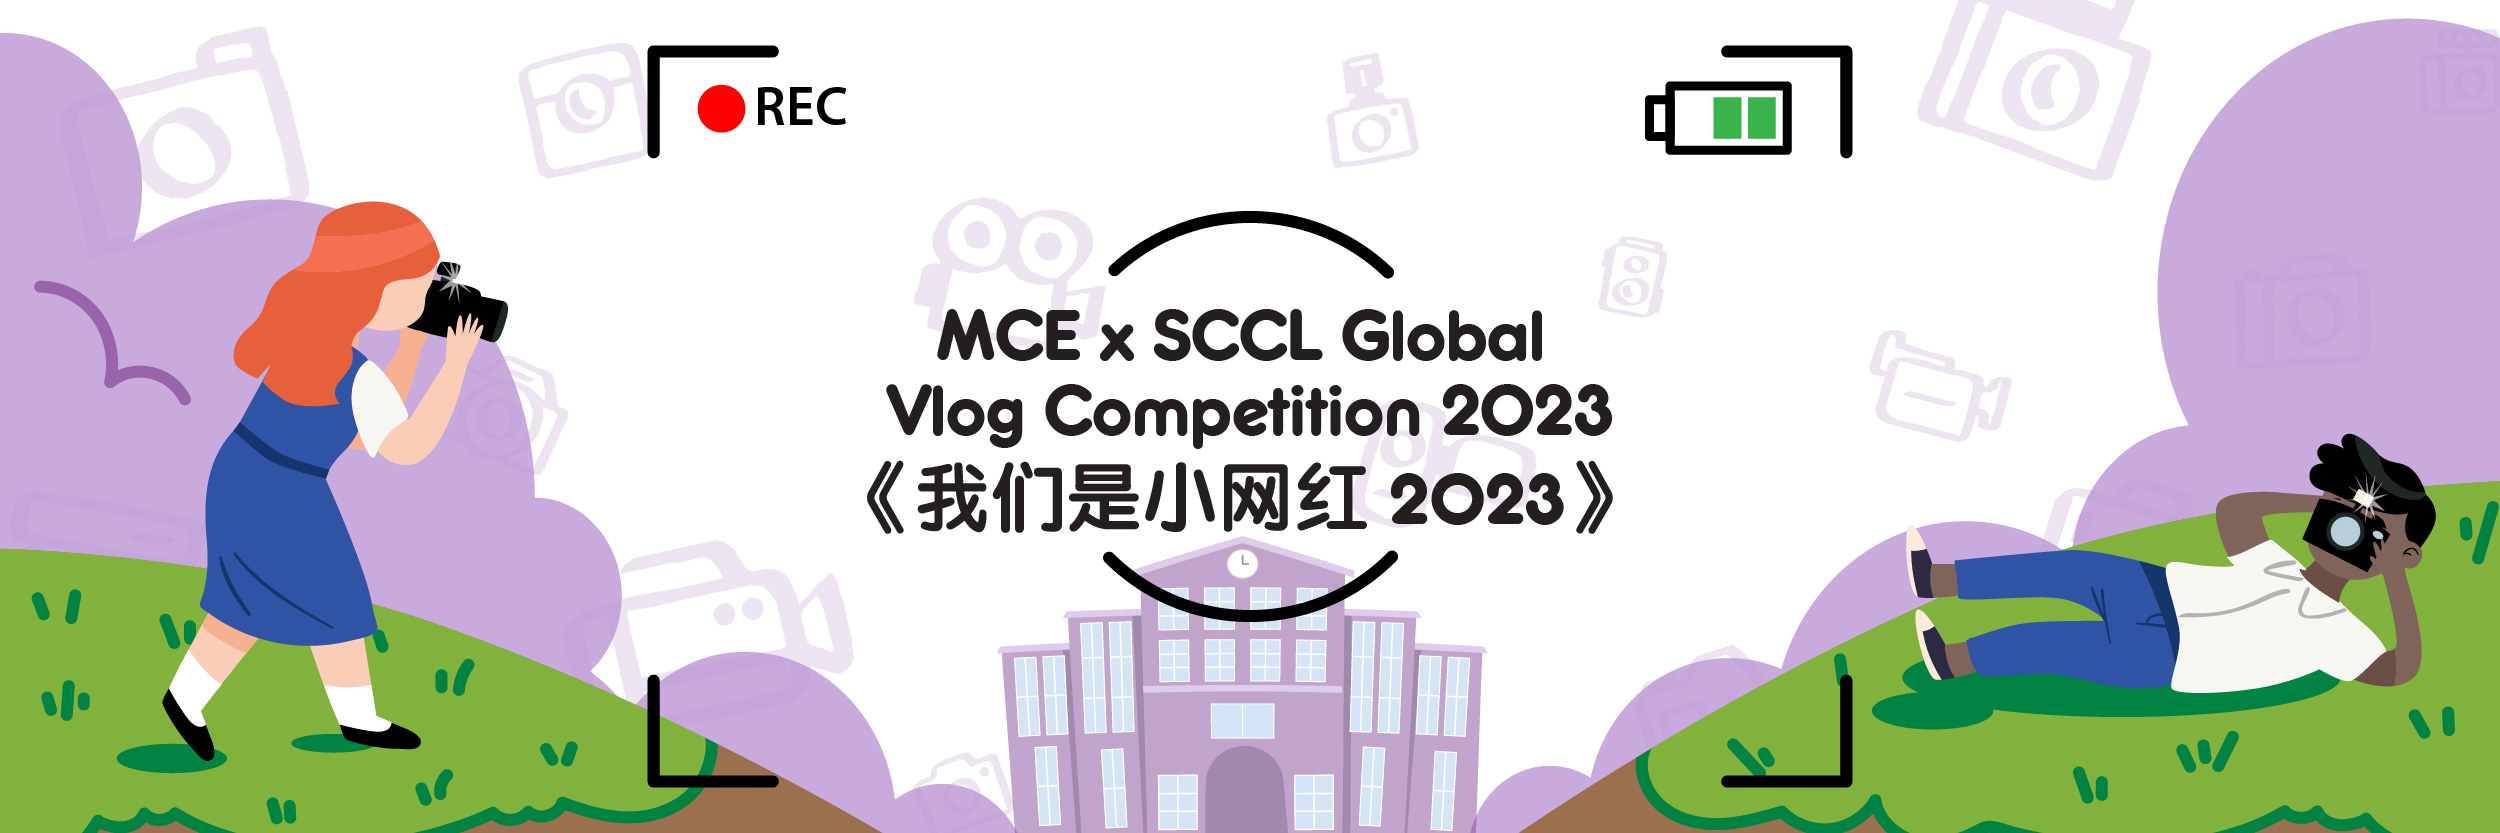 Global Vlog Competition 2023